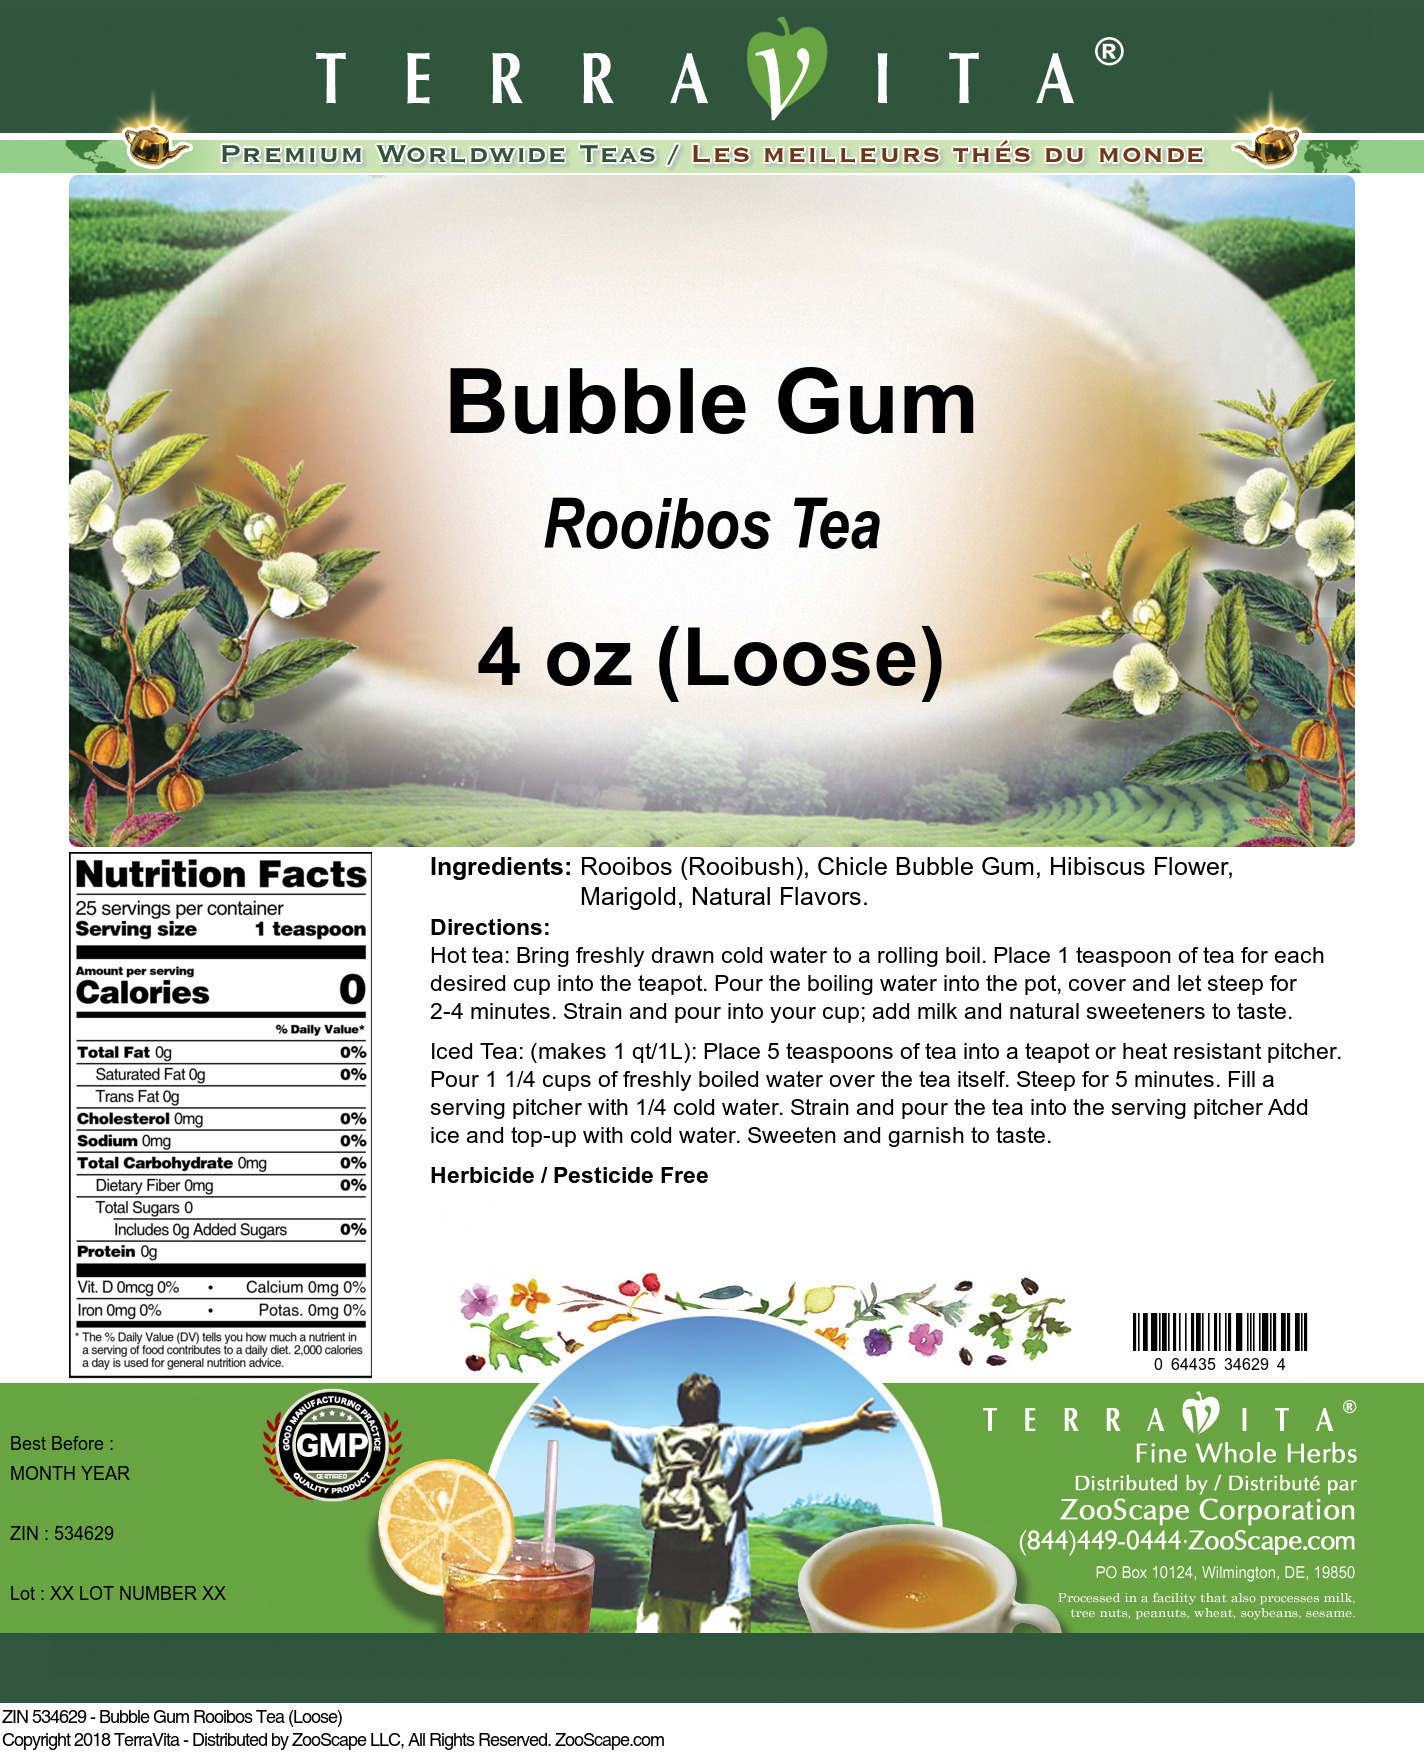 Bubble Gum Rooibos Tea (Loose) - Label